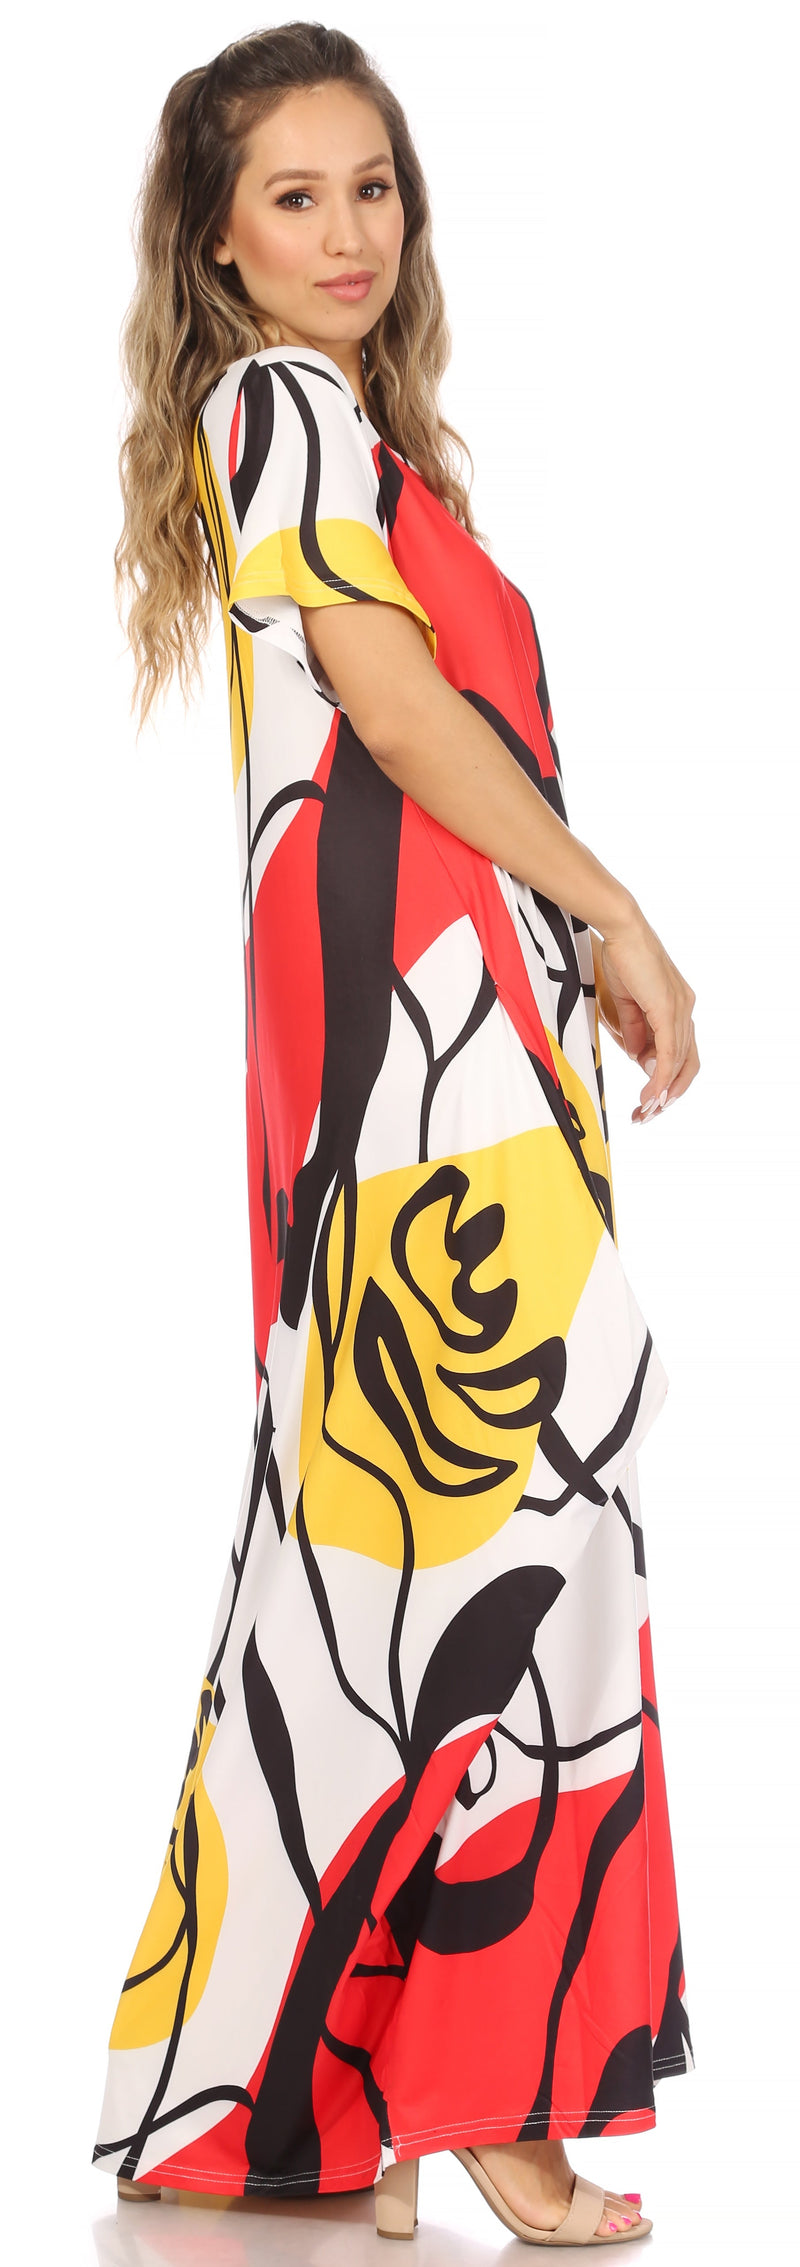 Sakkas Abeni Women's Short Sleeve Casual Print Long Maxi Cover-up Caftan Dress